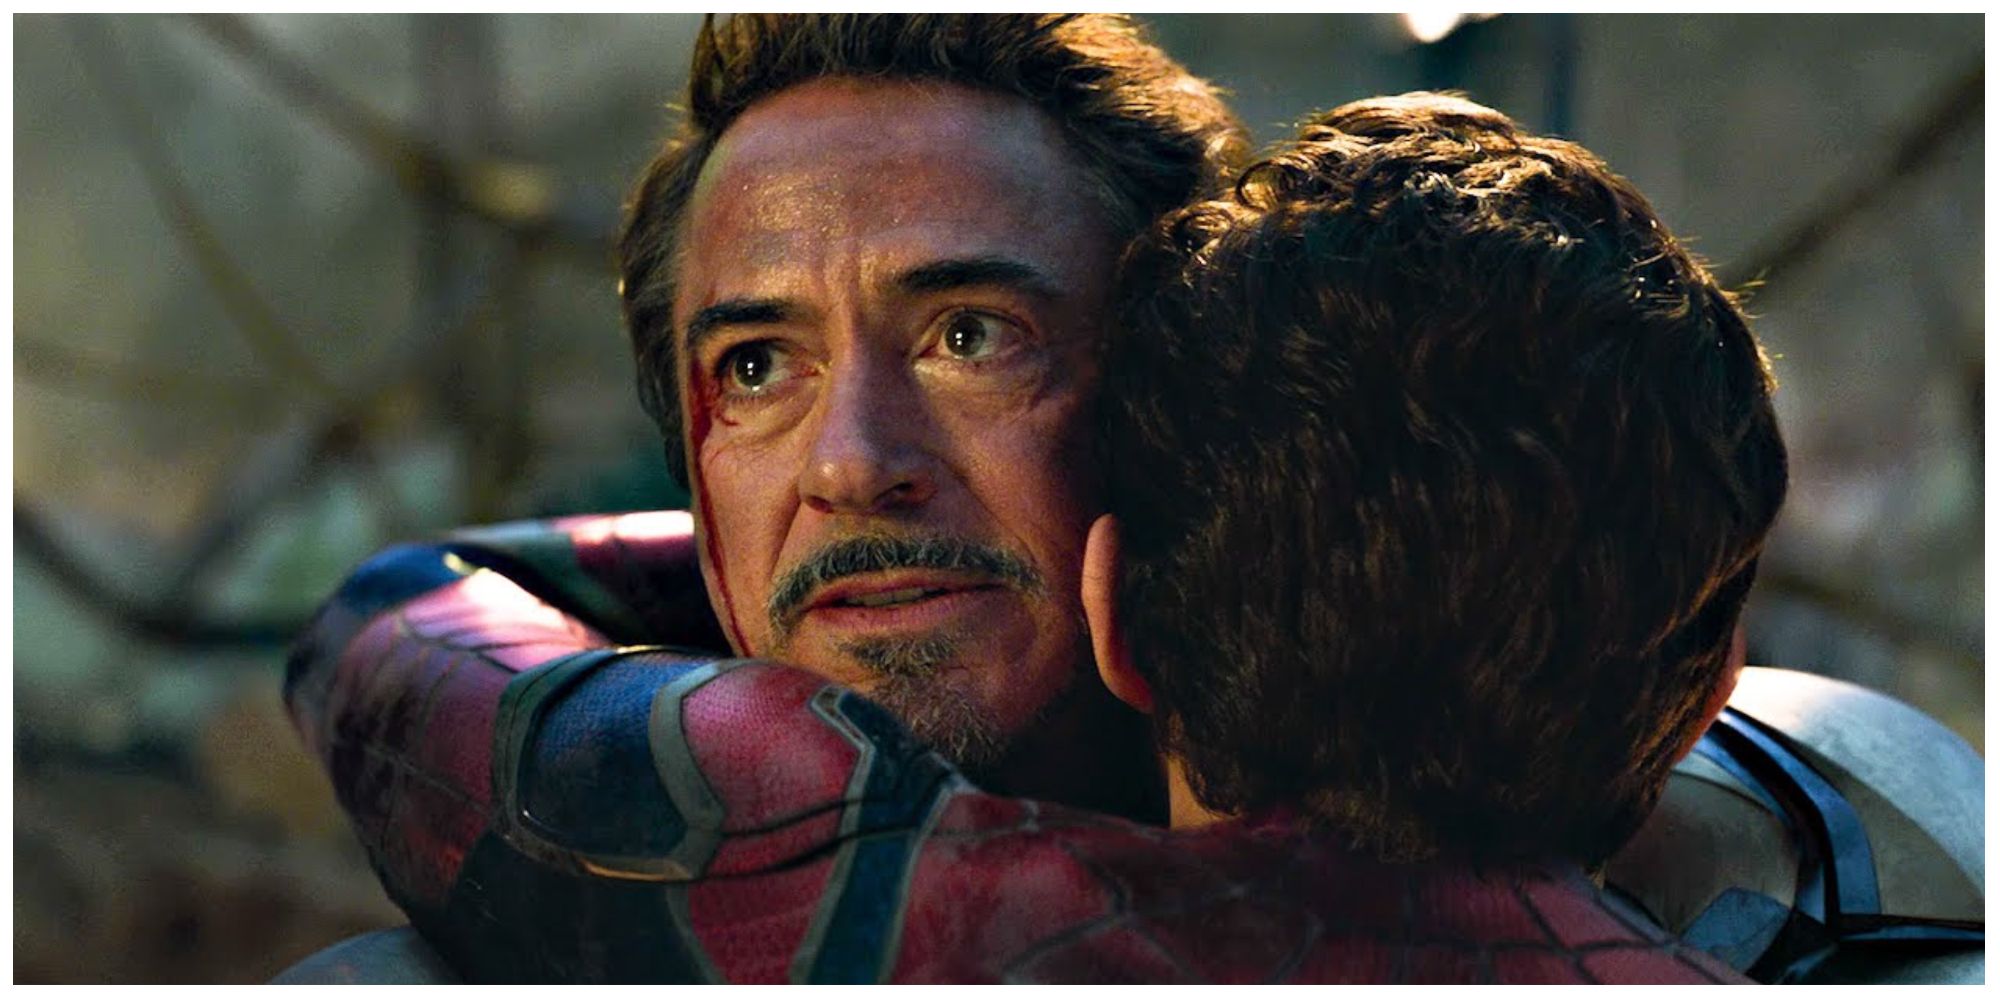 Robert Downey Jr. as Tony Stark, Iron Man. Tom Holland as Peter Parker, Spider-Man.